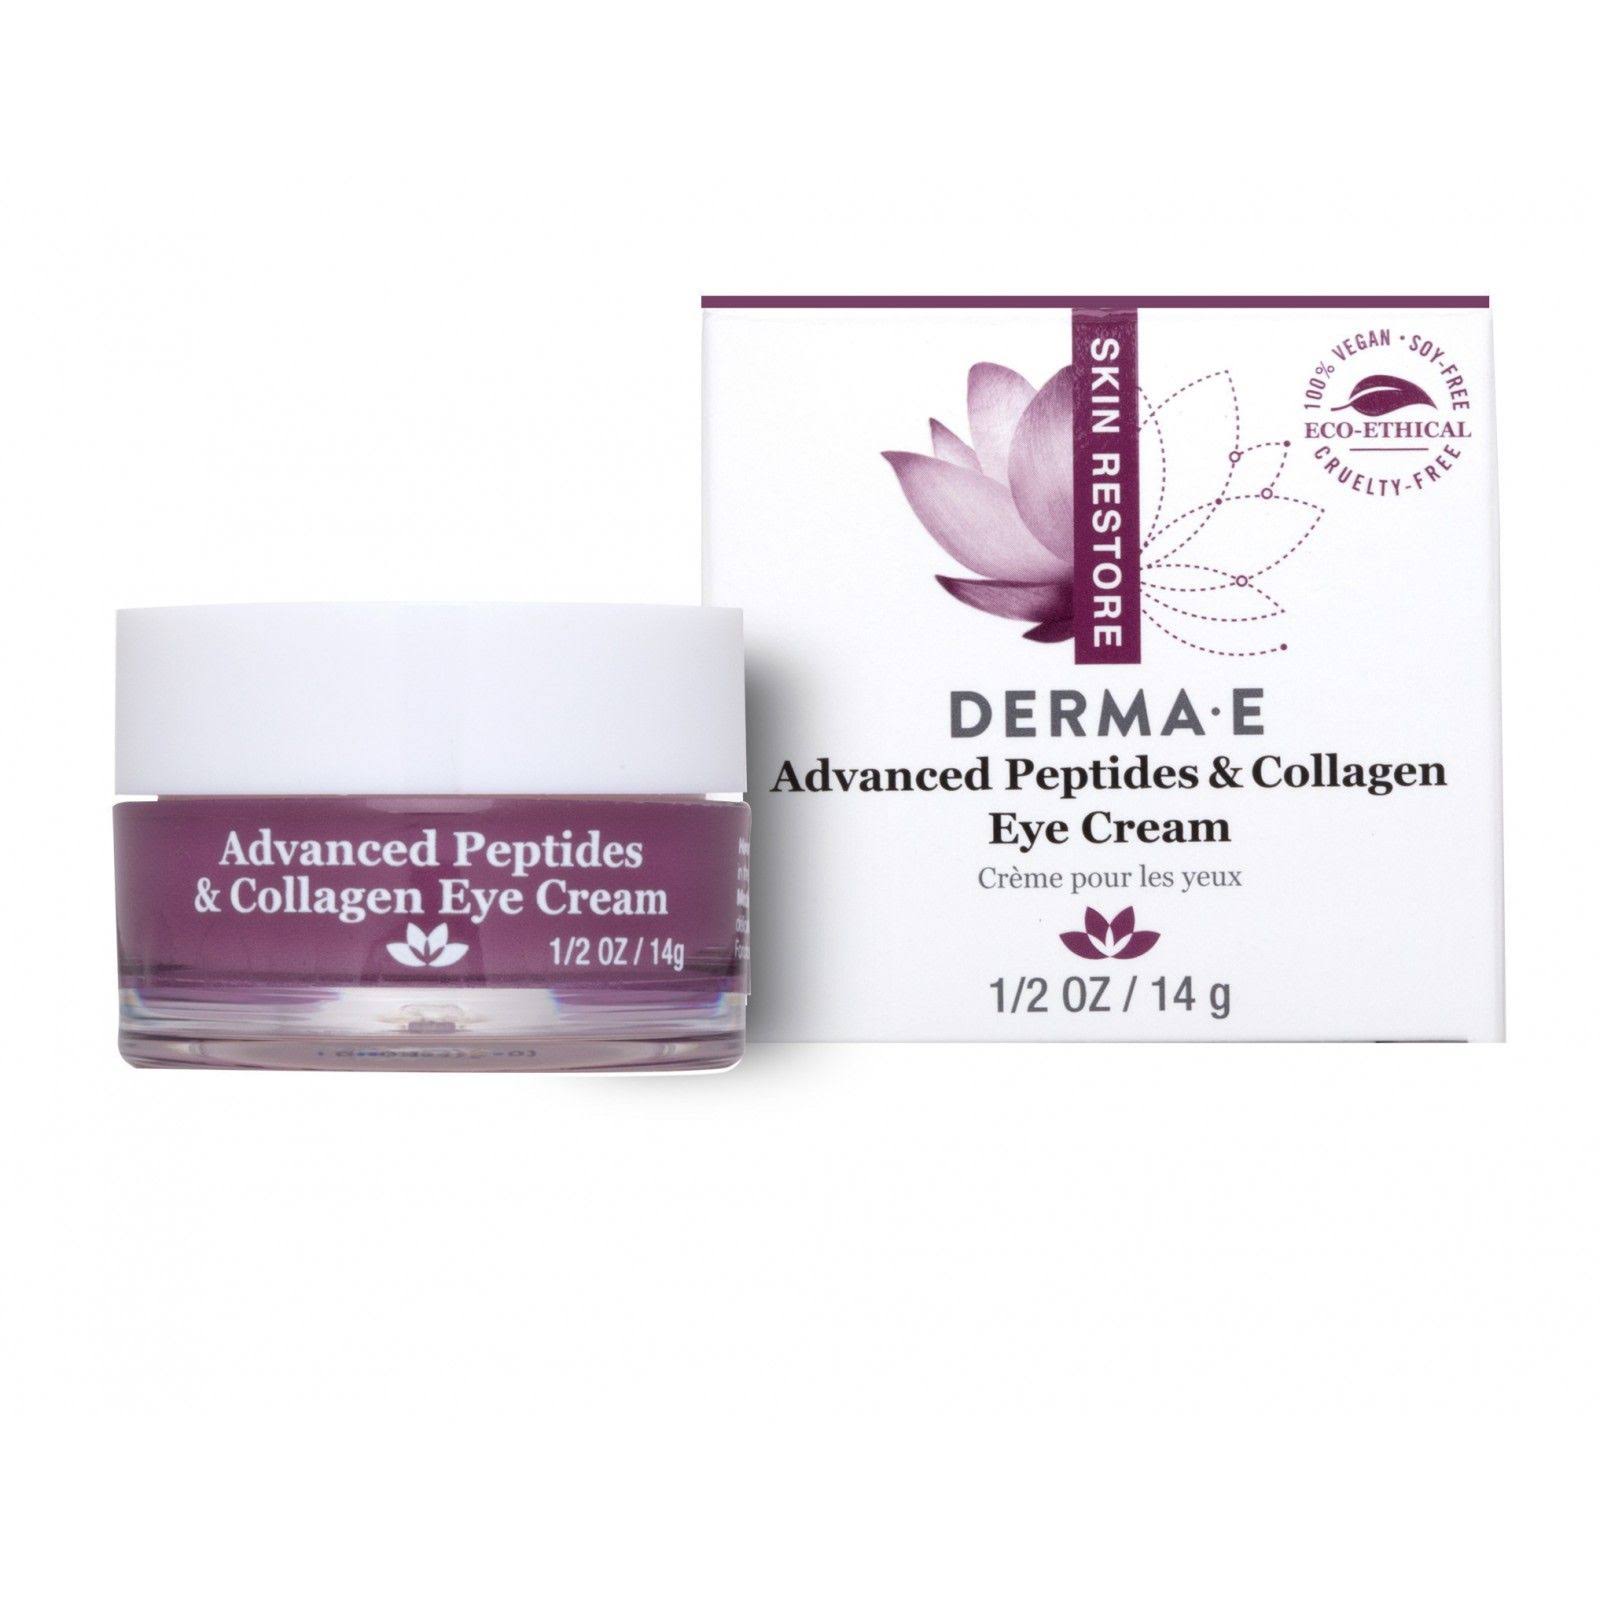 Derma E Deep Wrinkle Peptide Eye Creme Moisturizer - 0.5oz